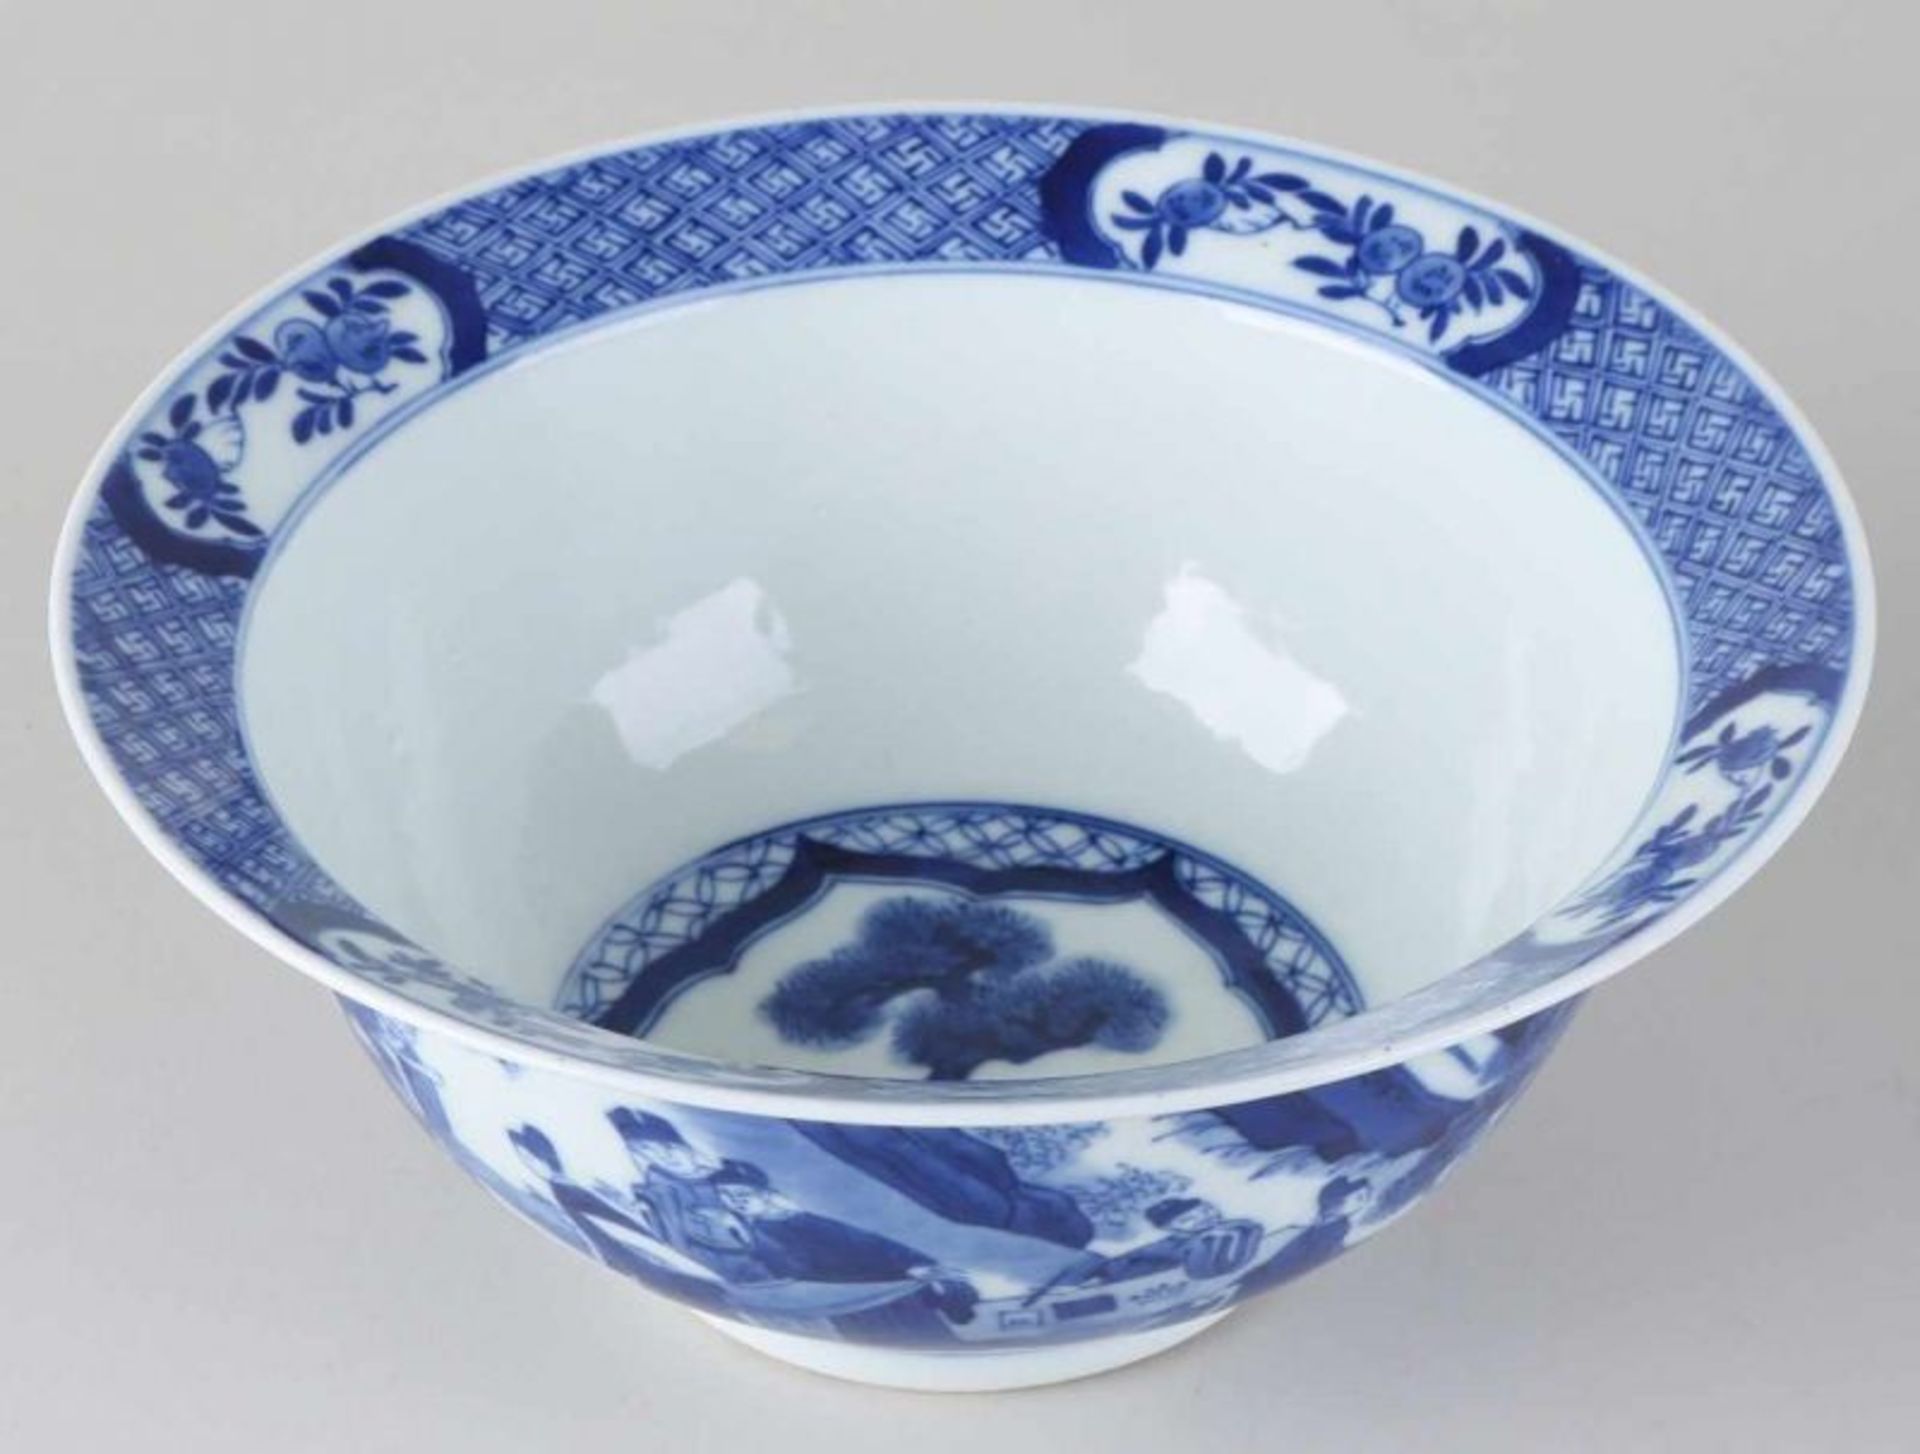 Large old Chinese porcelain Kang Xi branded flip-flop bowl, with figures in landscape decor all